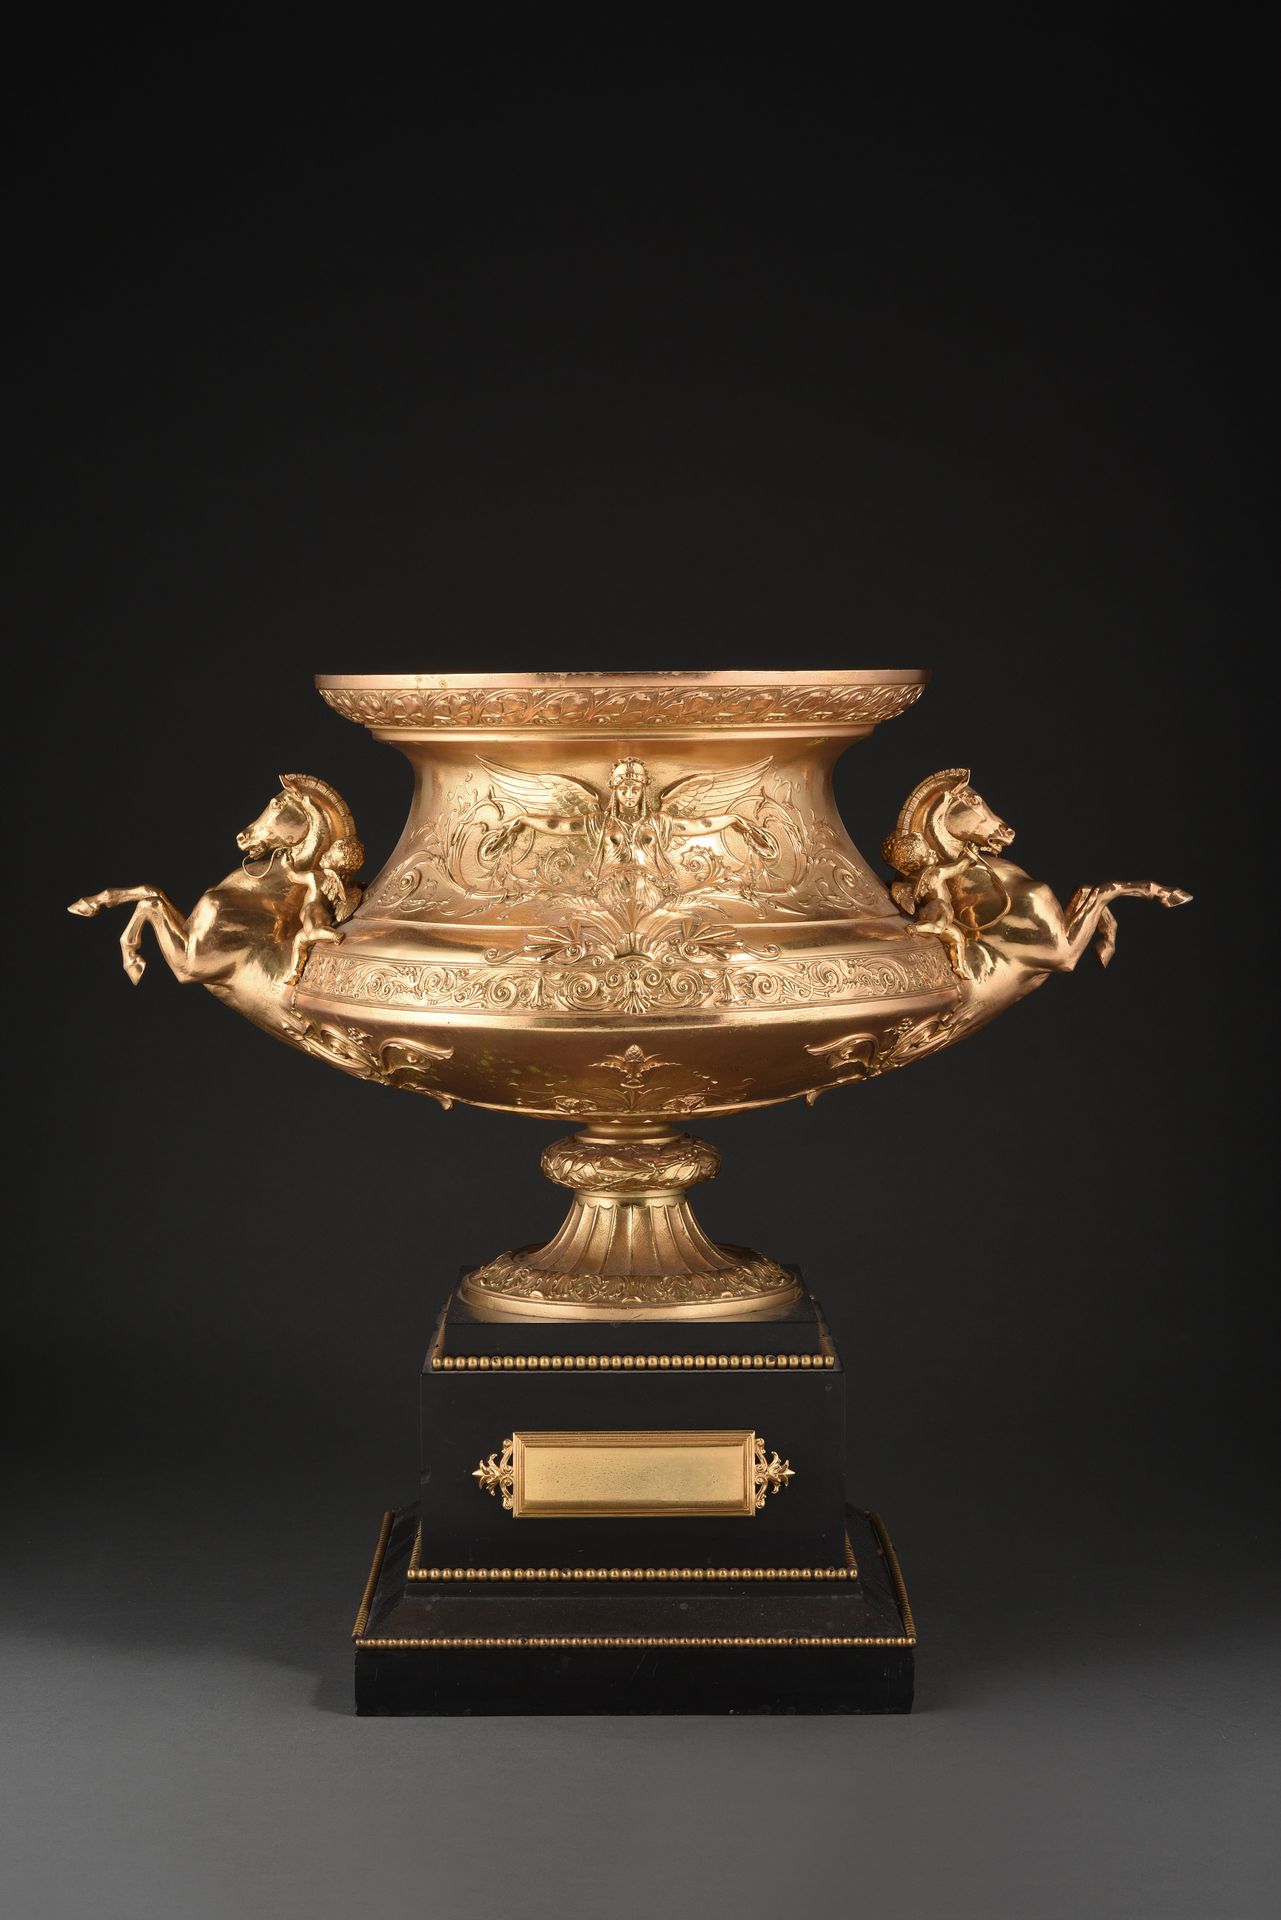 Null 鎏金大铜碗

壶身精雕细刻的Renommées的叶状图案。

叶子。手柄是由普提牵着的马的形状，放在一个有凹槽的基座上。

它矗立在一个方形的黑色大理&hellip;